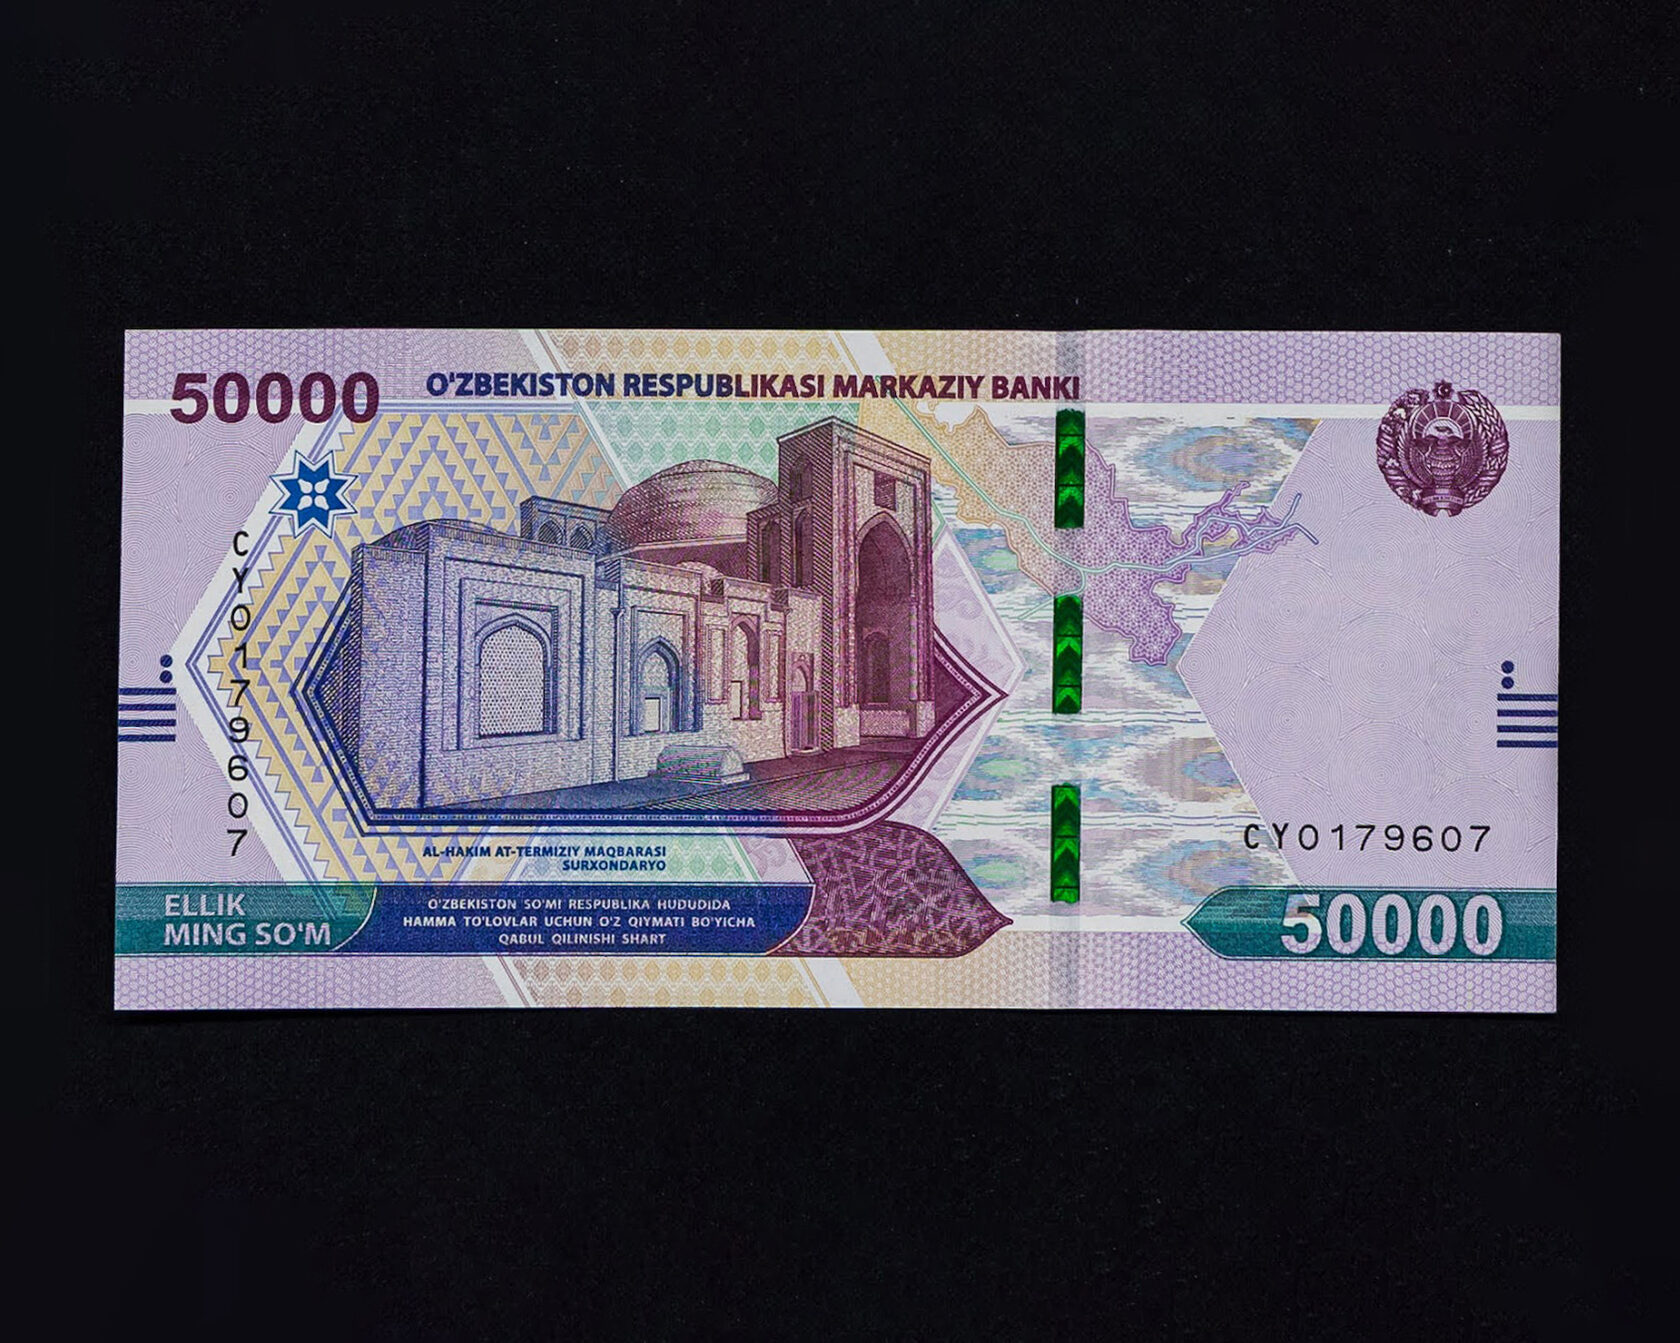 Доллар валюта сум узбекистан. 2000 Узбекских сум. Узбекистан валюта 100$. Валюта Узбекистана сум. 50000 Сум купюра.